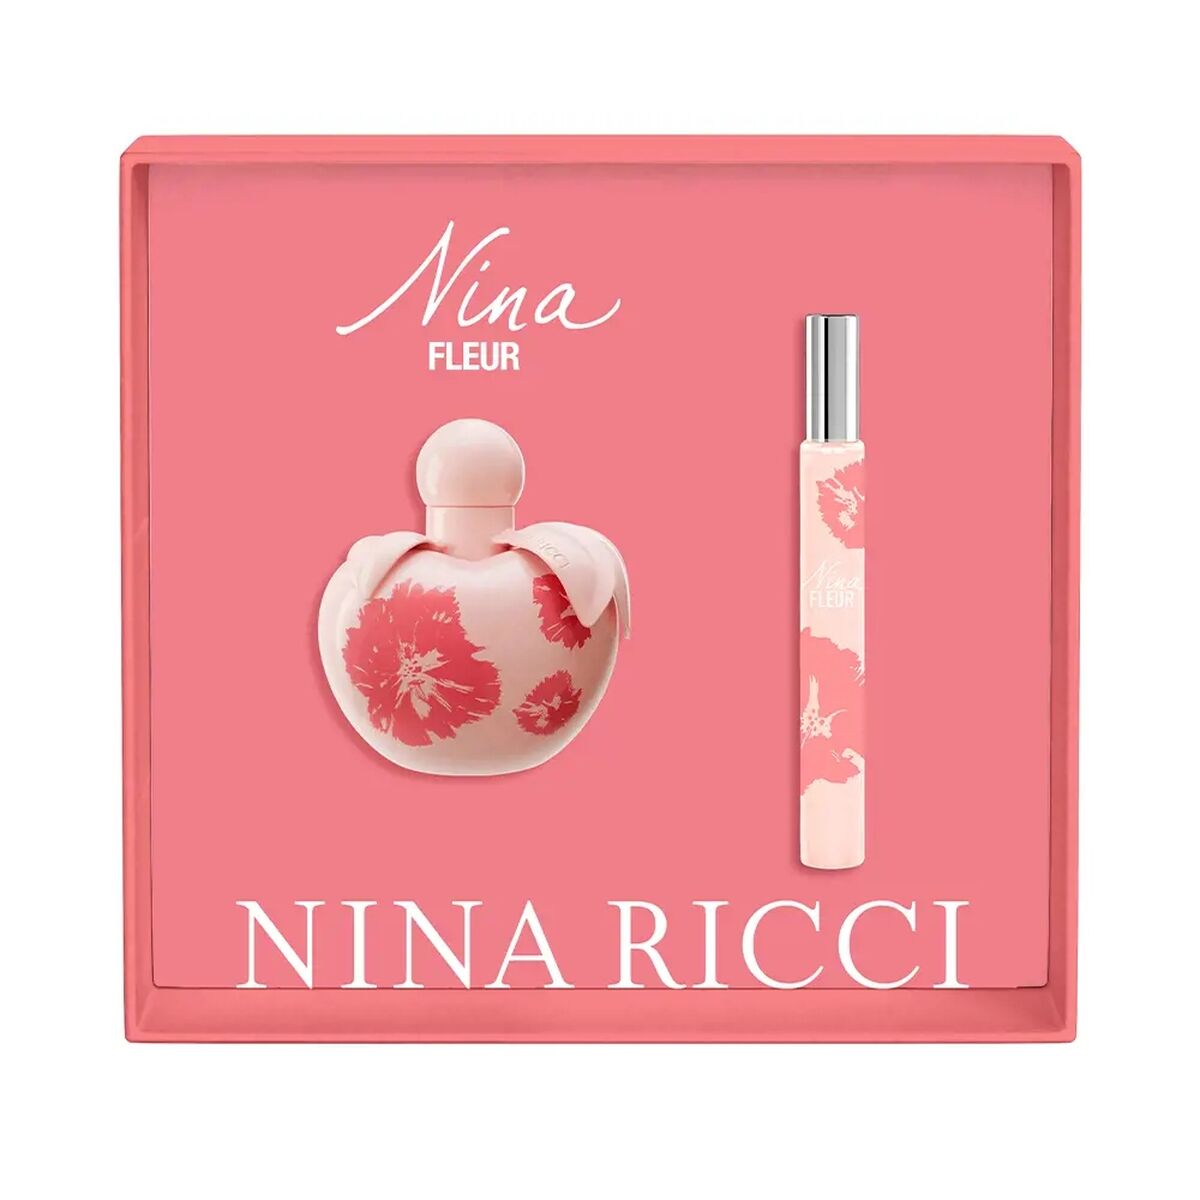 Women's Perfume Set Nina Ricci Nina Fleur 2 Pieces-0